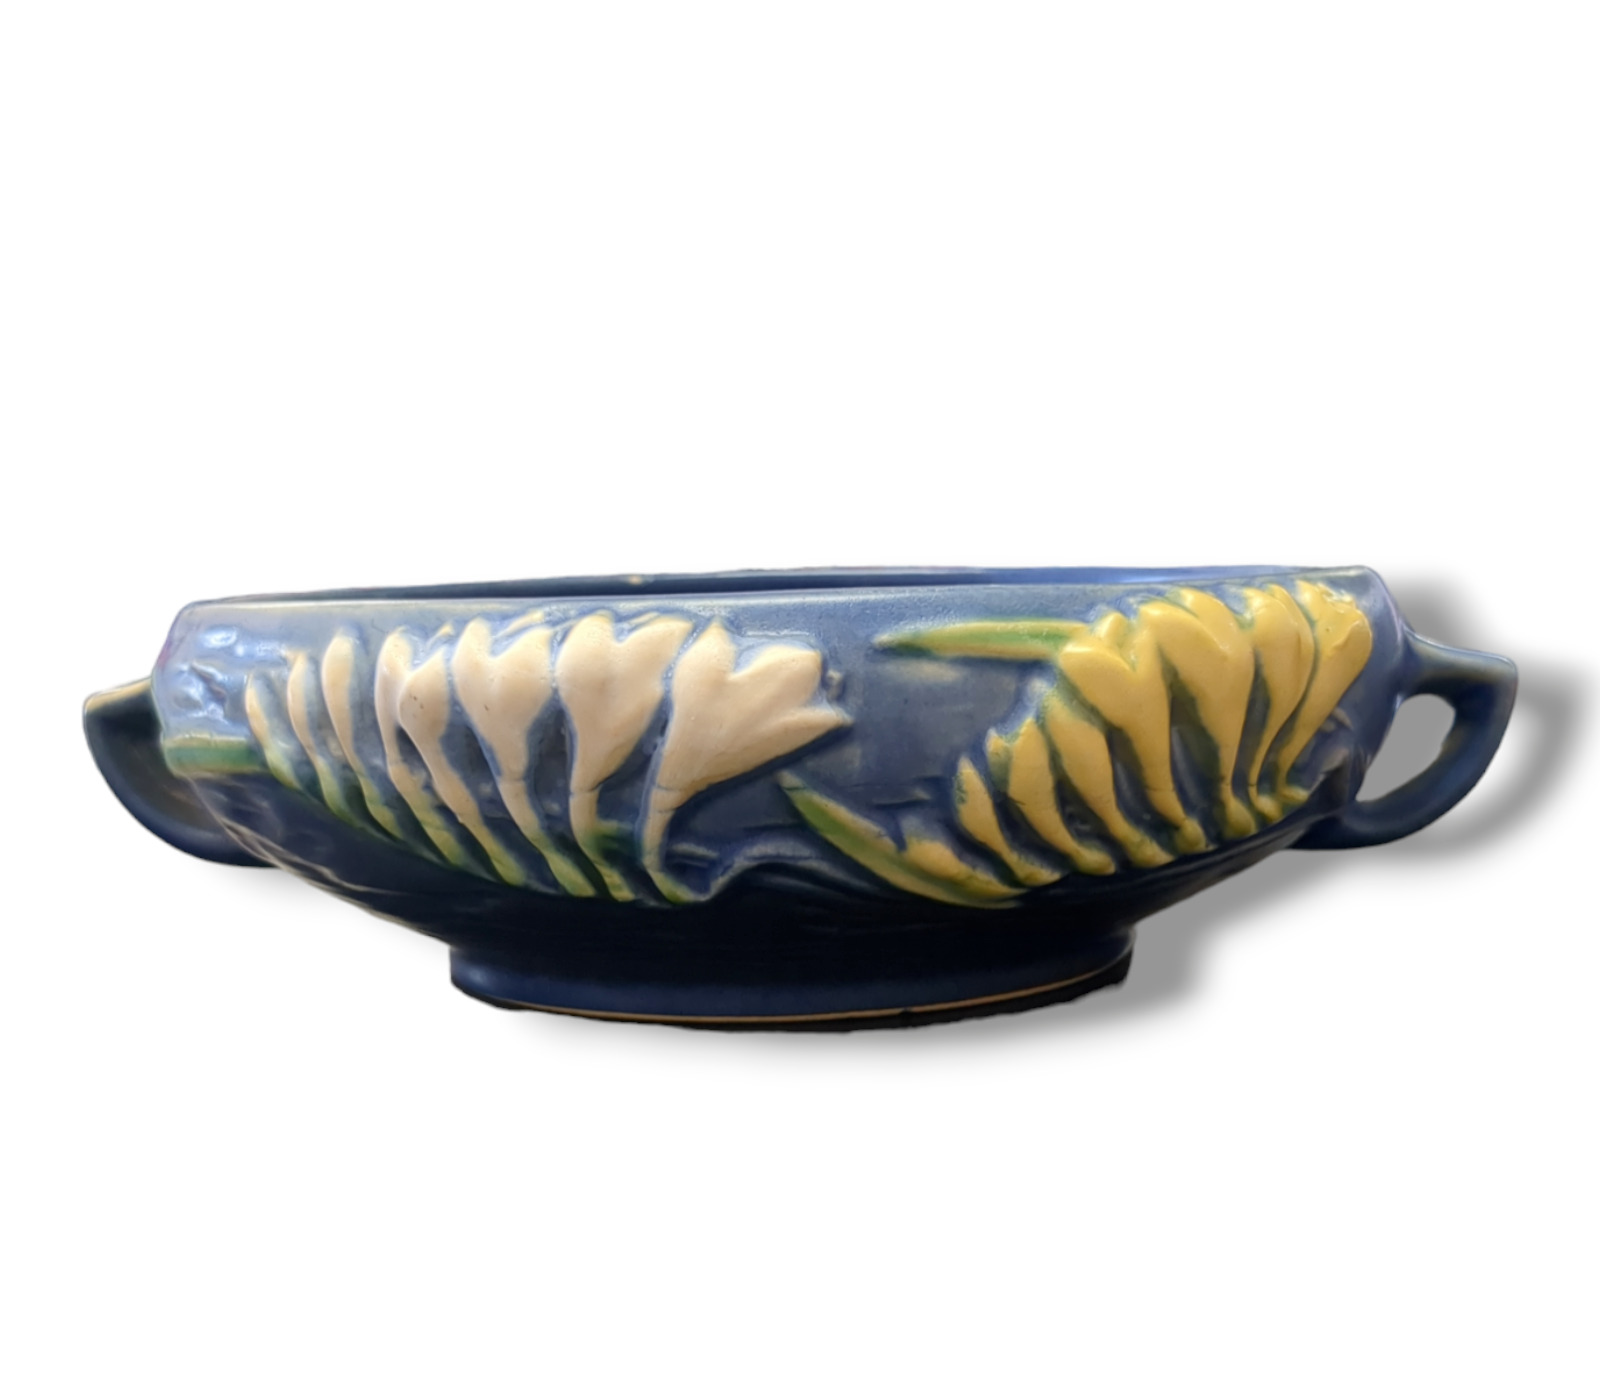 Vintage Roseville Pottery Freesia Bowl, Shape 464-6, Delft Blue